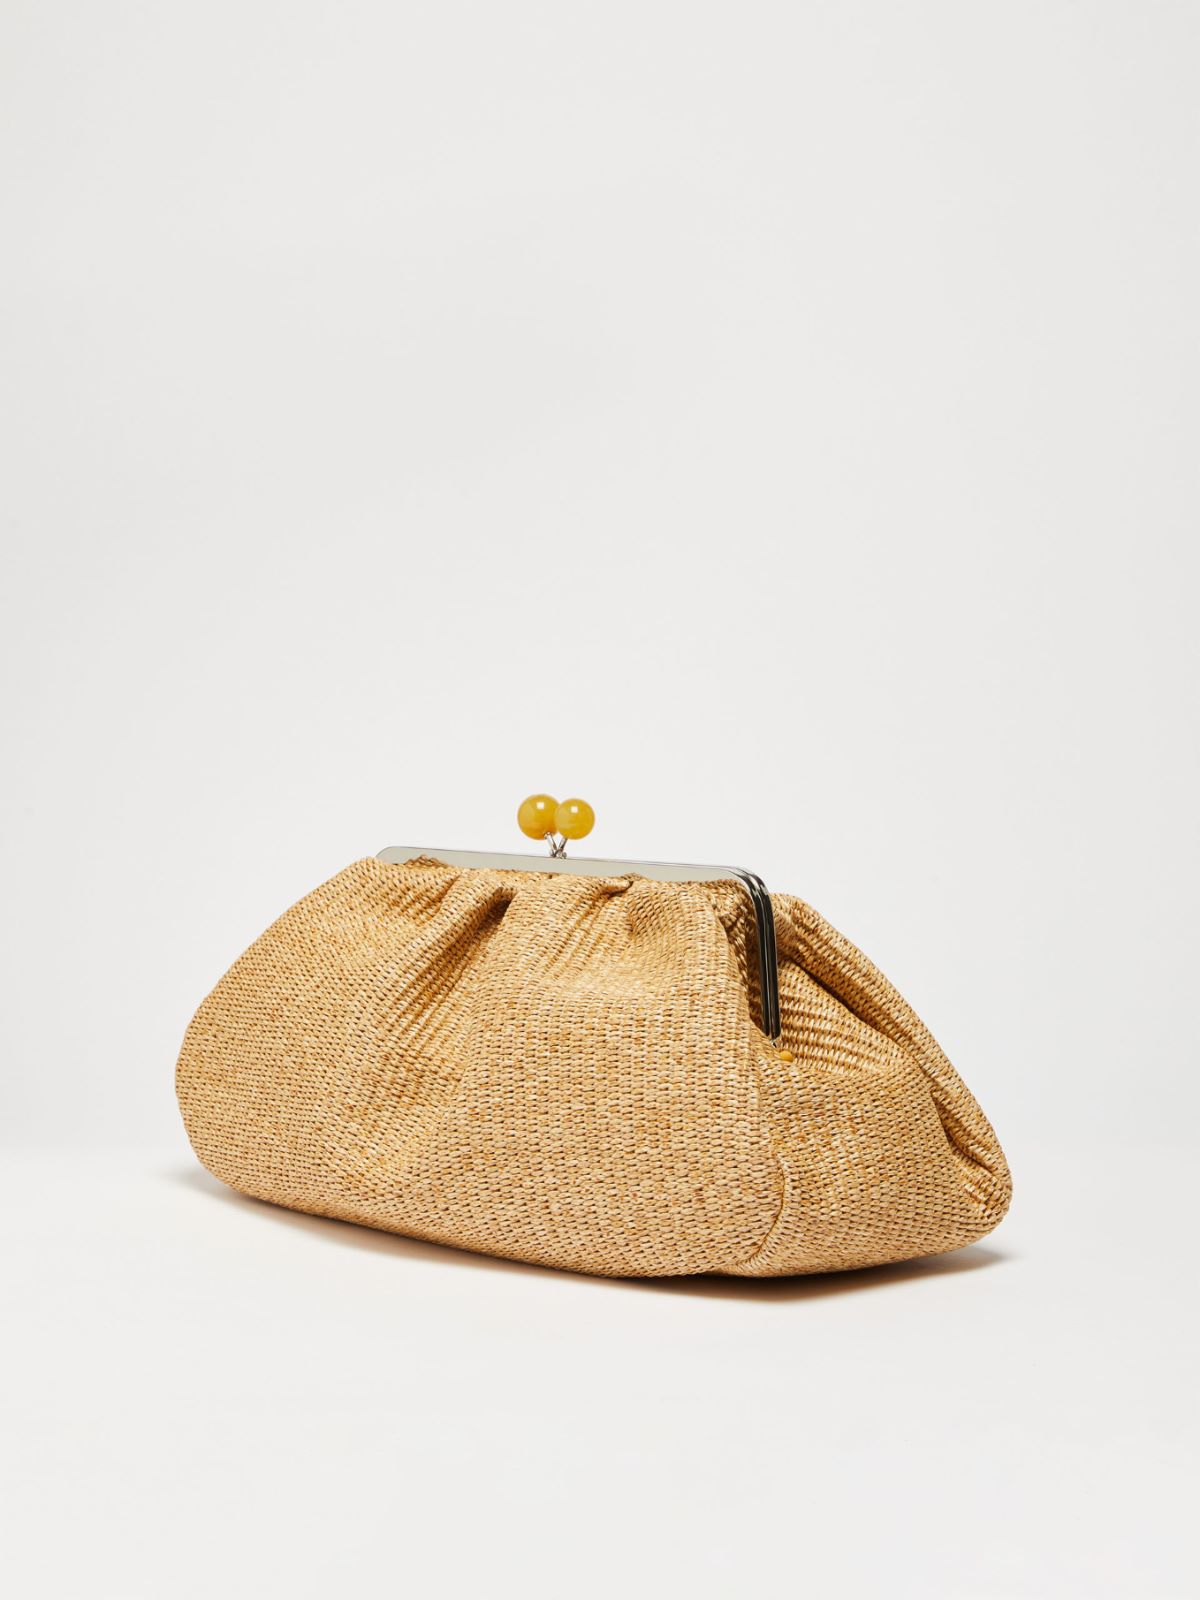 Pasticcino Bag Large in rafia - NATURALE - Weekend Max Mara - 2